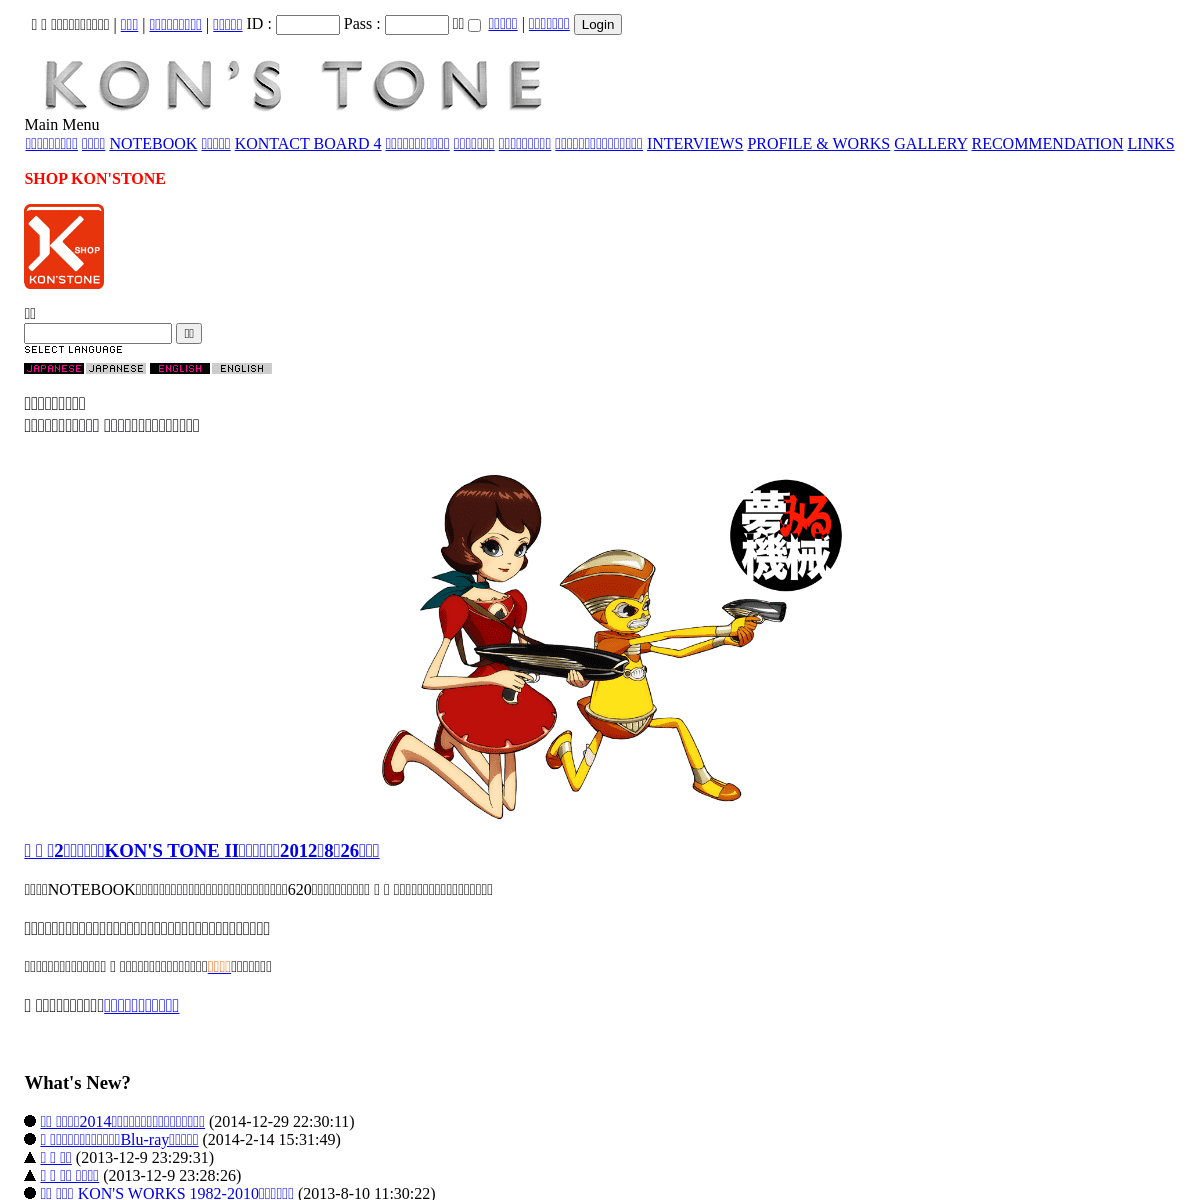 A complete backup of https://s-kon.net